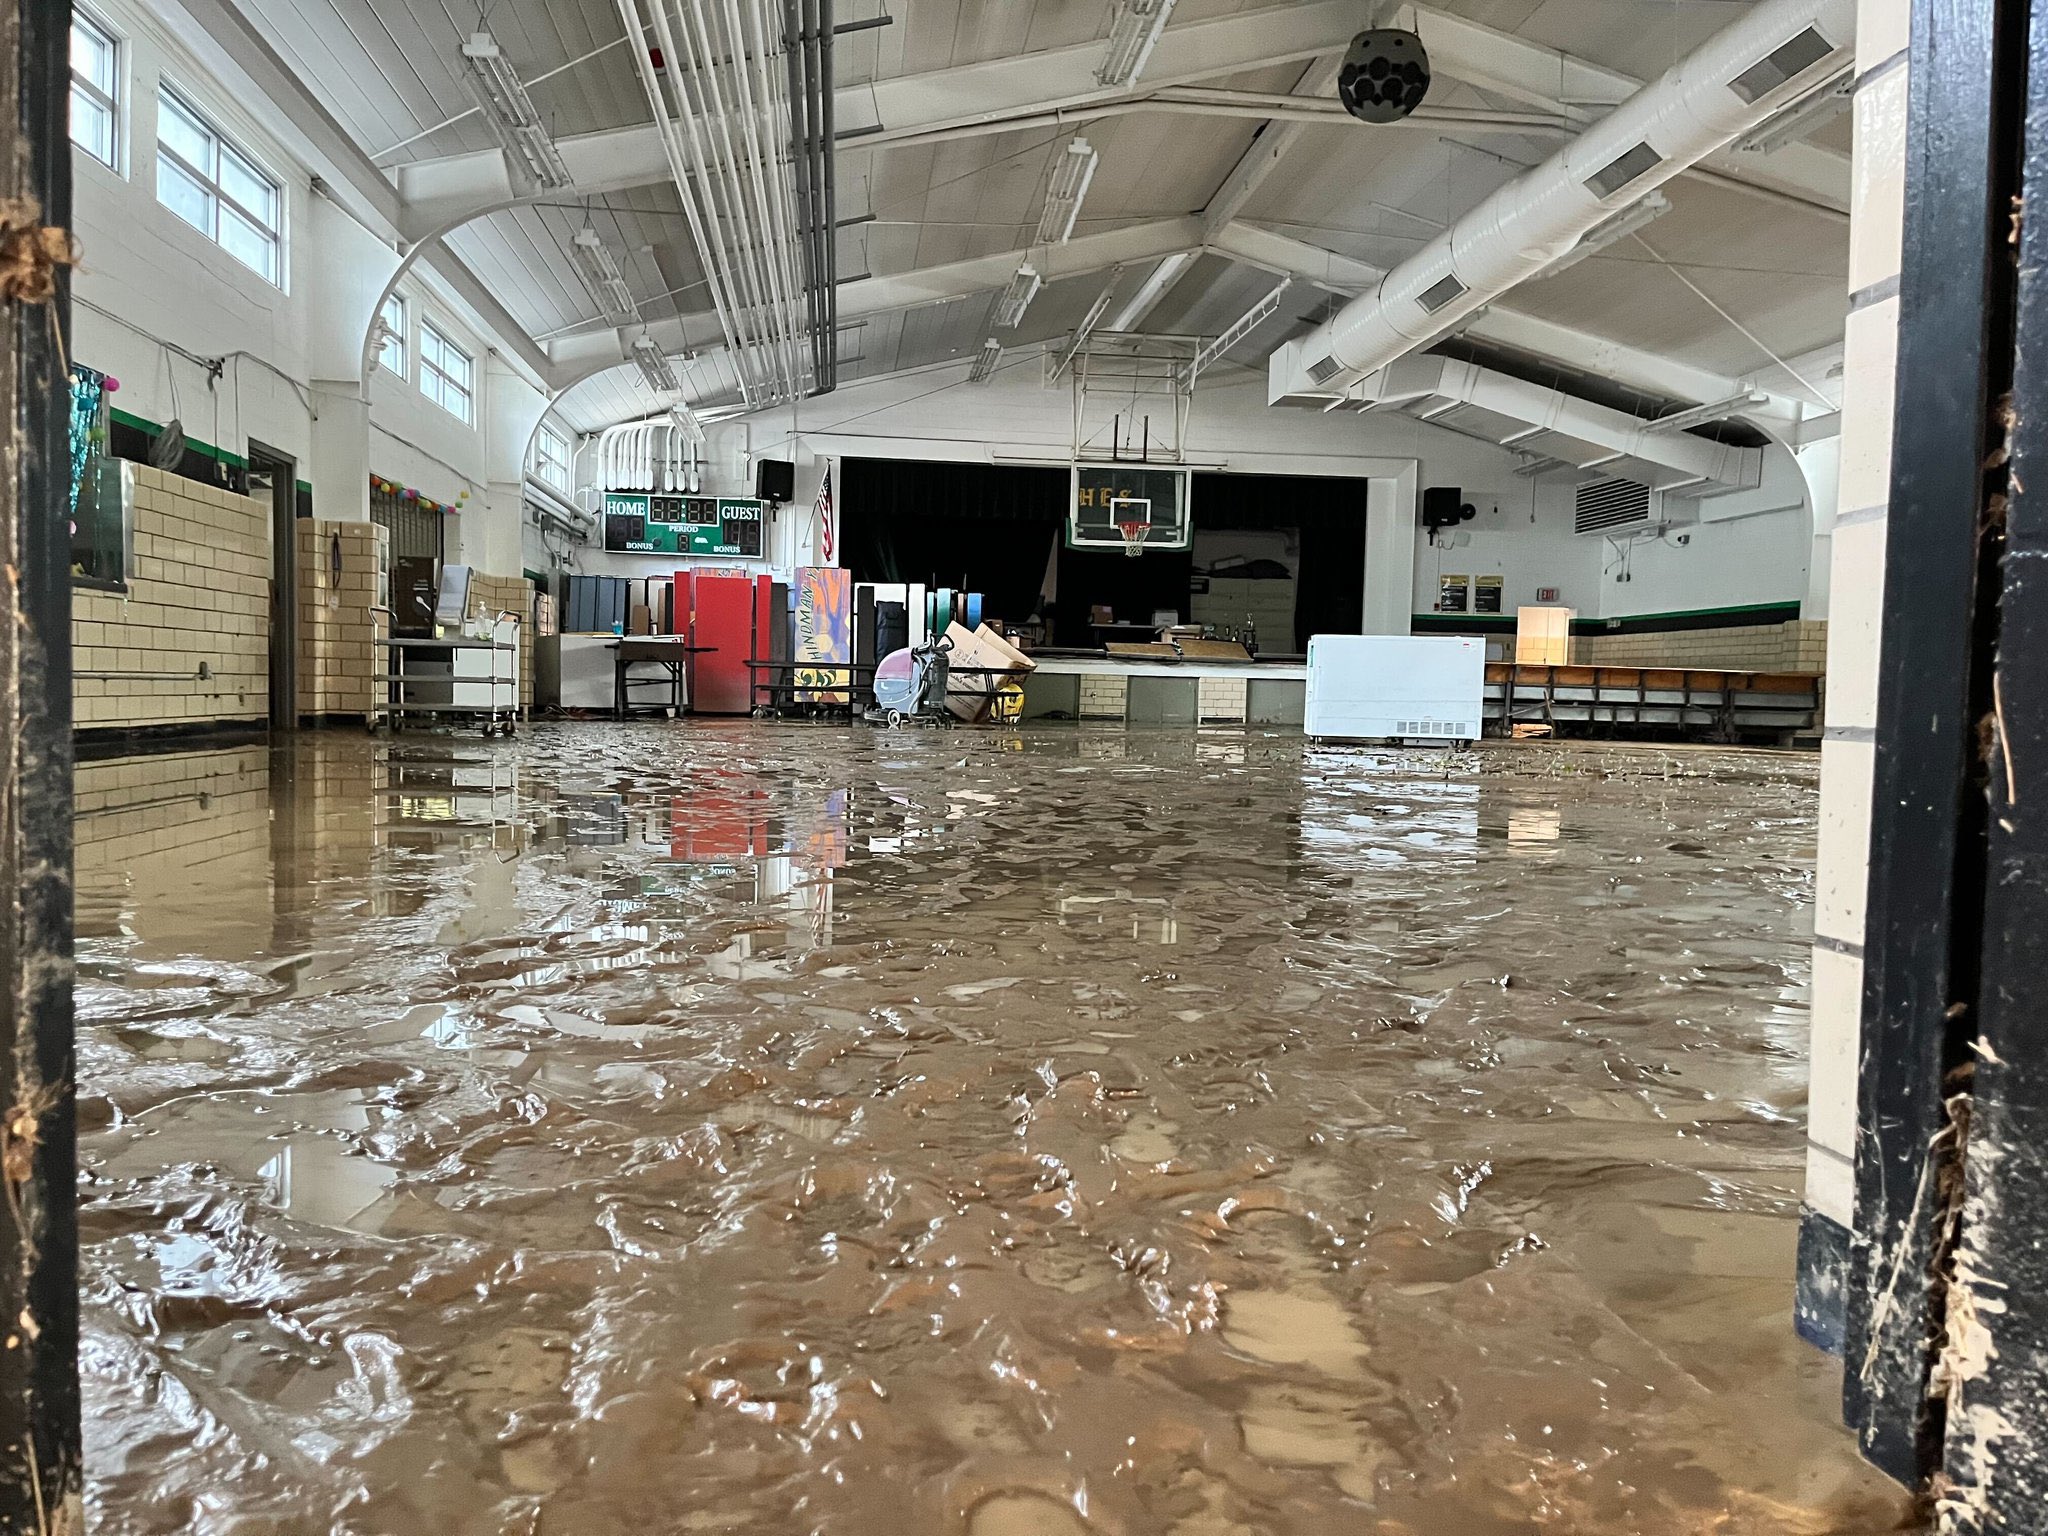 Hindman Elementary School in Hindman KY damaged by flash flooding